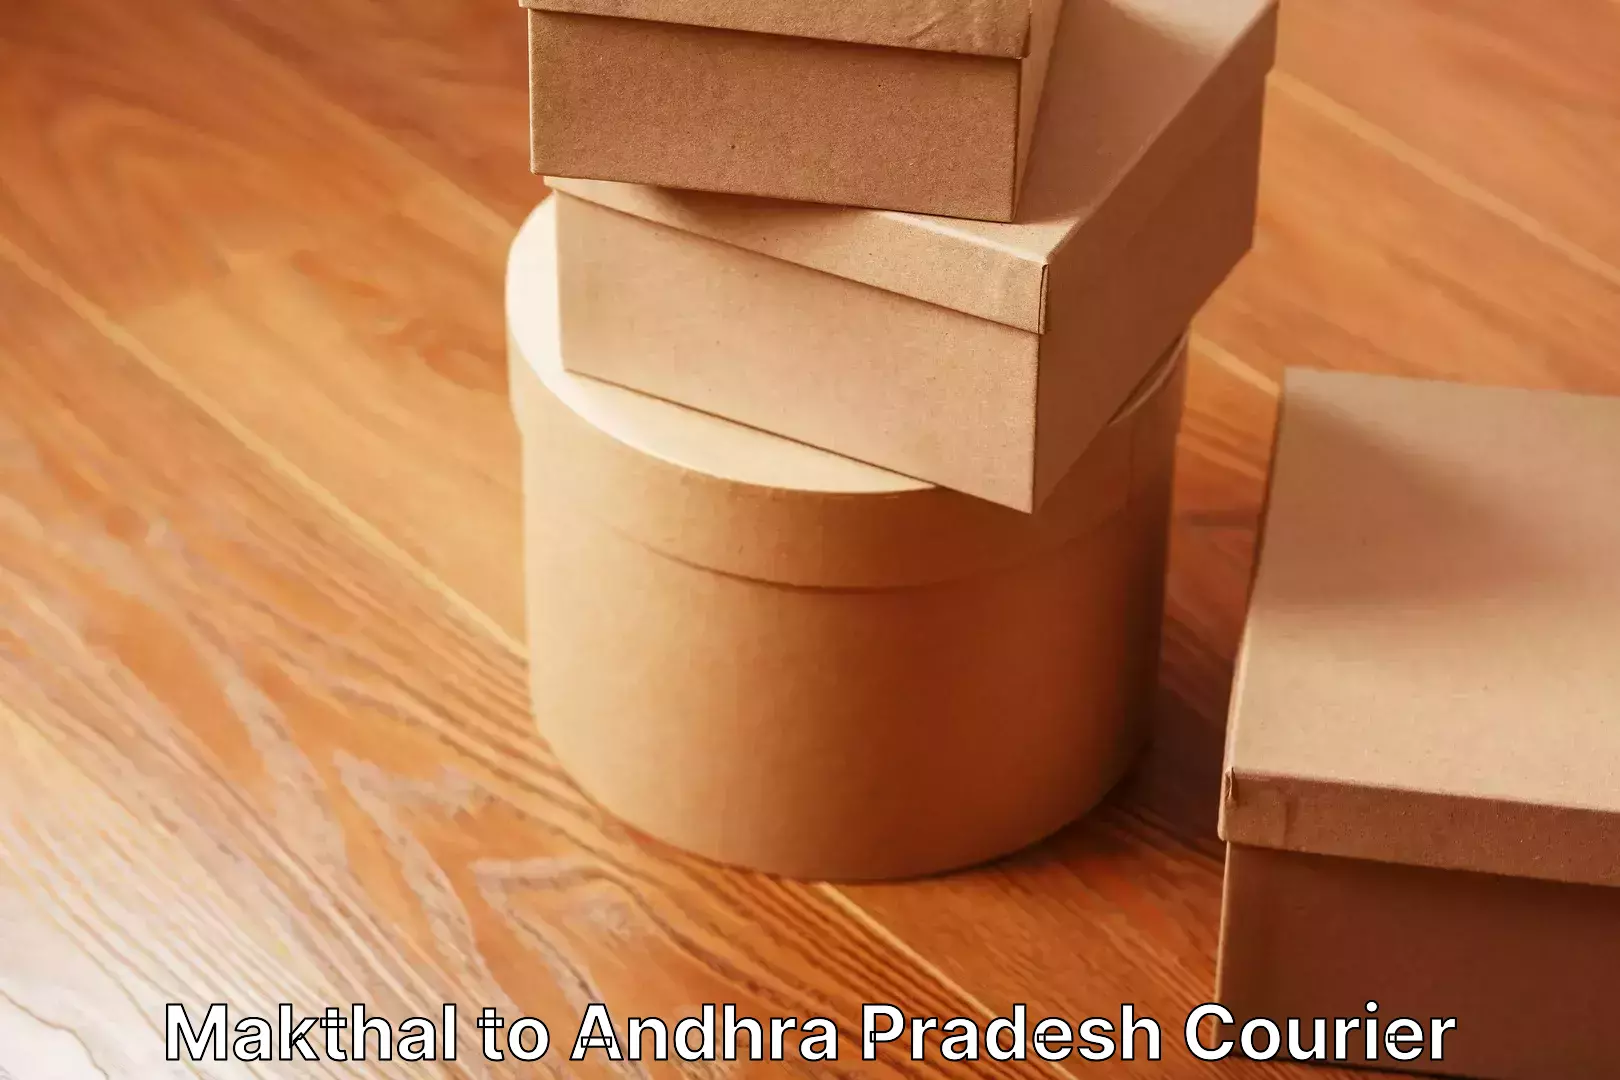 Professional moving company Makthal to Andhra Pradesh